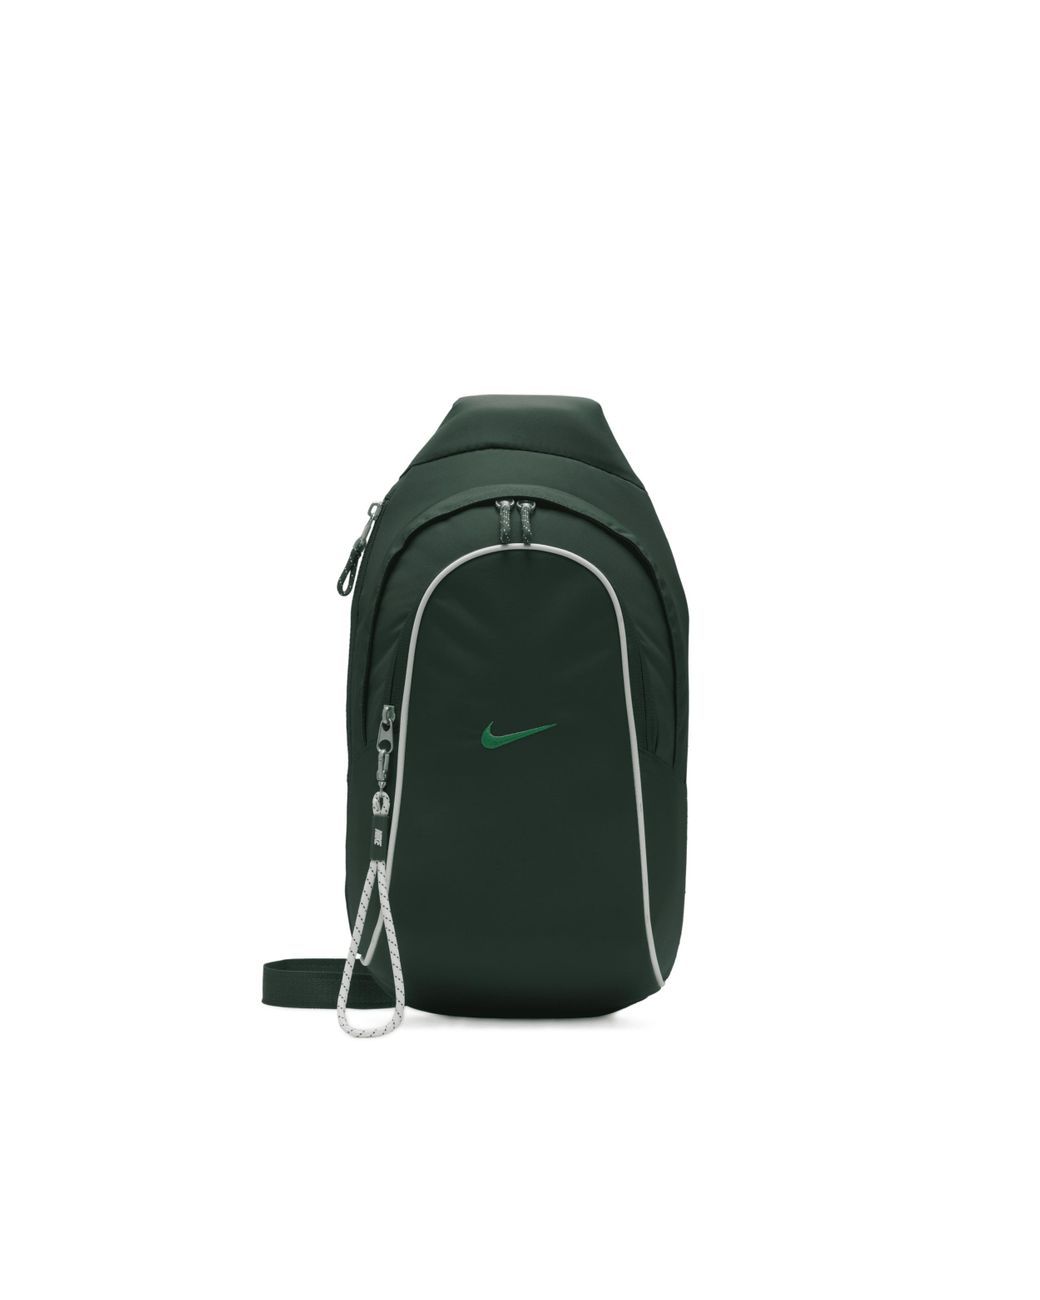 Golf Accessories - Golf Luggage - Nike Departure Messenger Bag